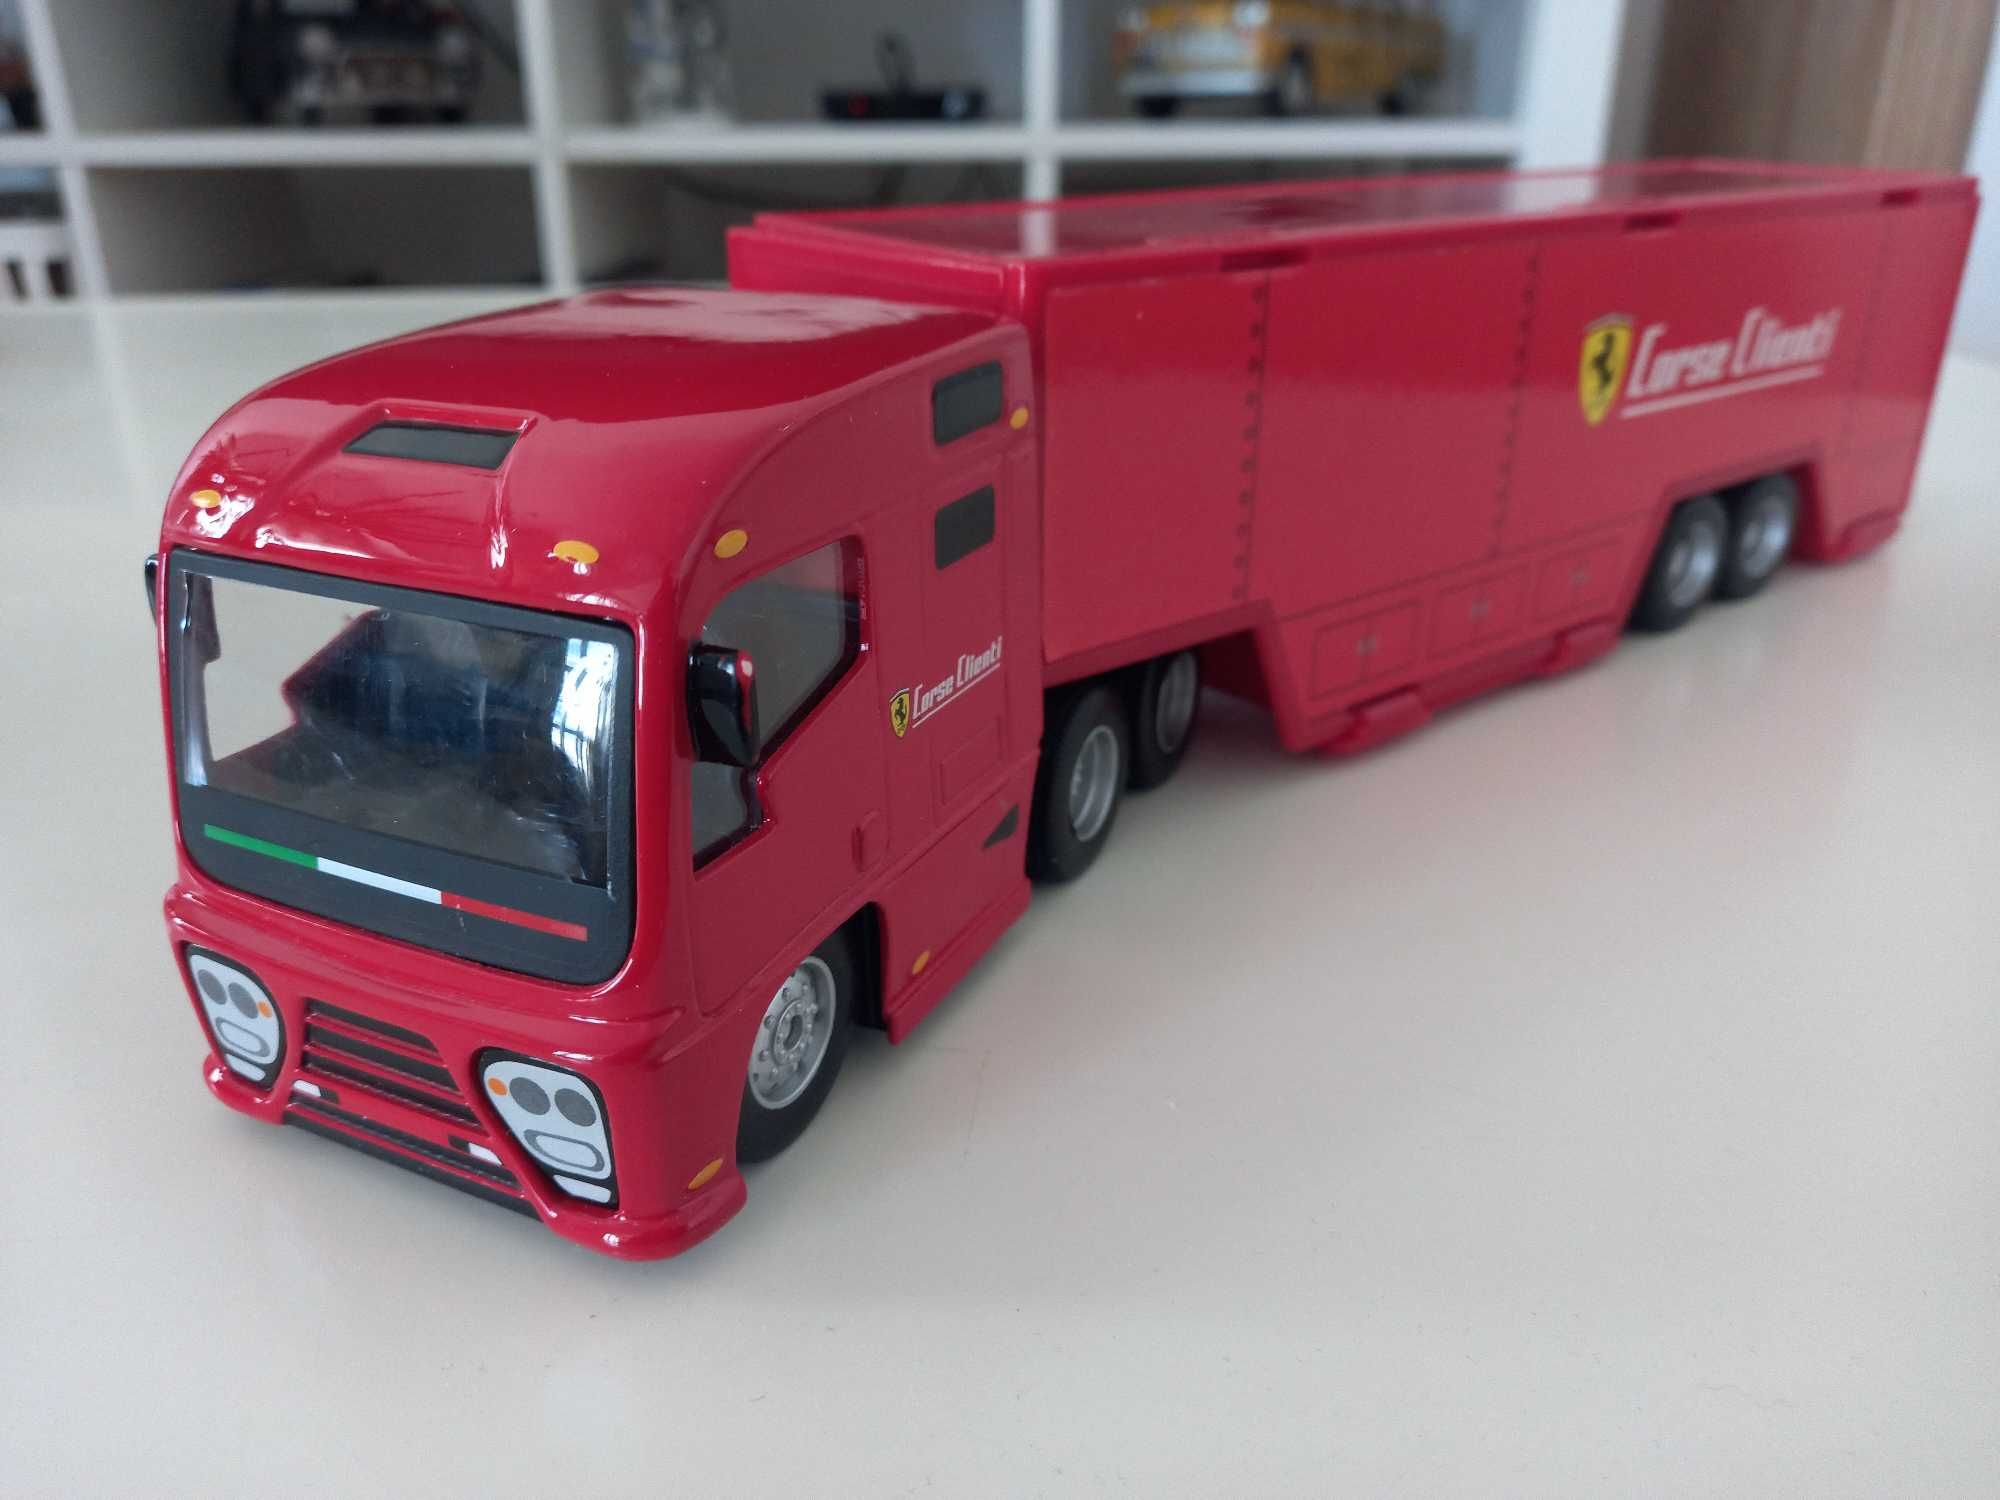 Големи играчки- 31-36 см. Камион FERRARI, Burago и мотор Vespa, Mattel